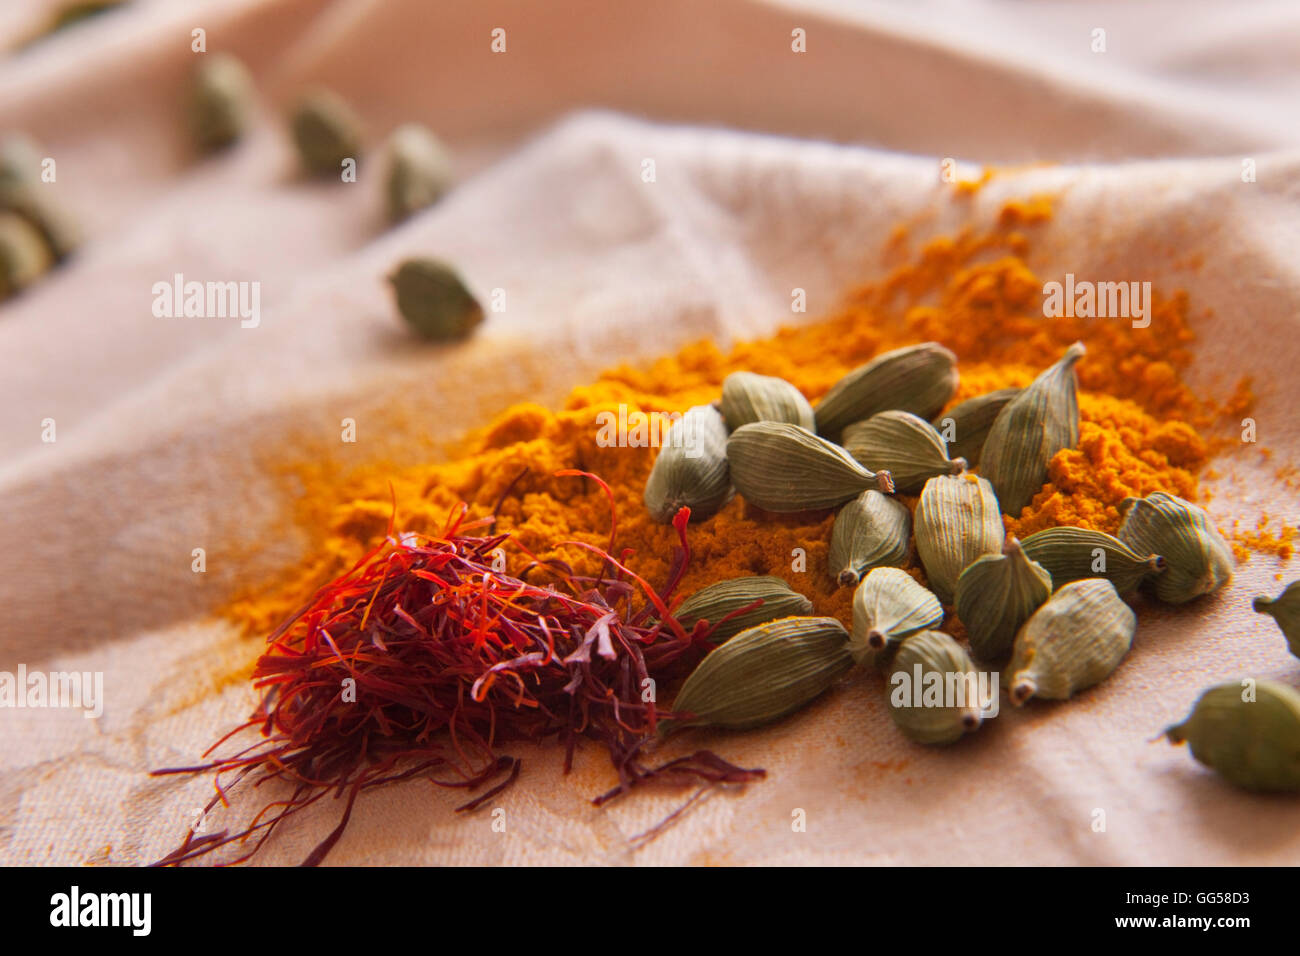 Green cardamom pods, saffron and turmeric powder on cloth Stock Photo